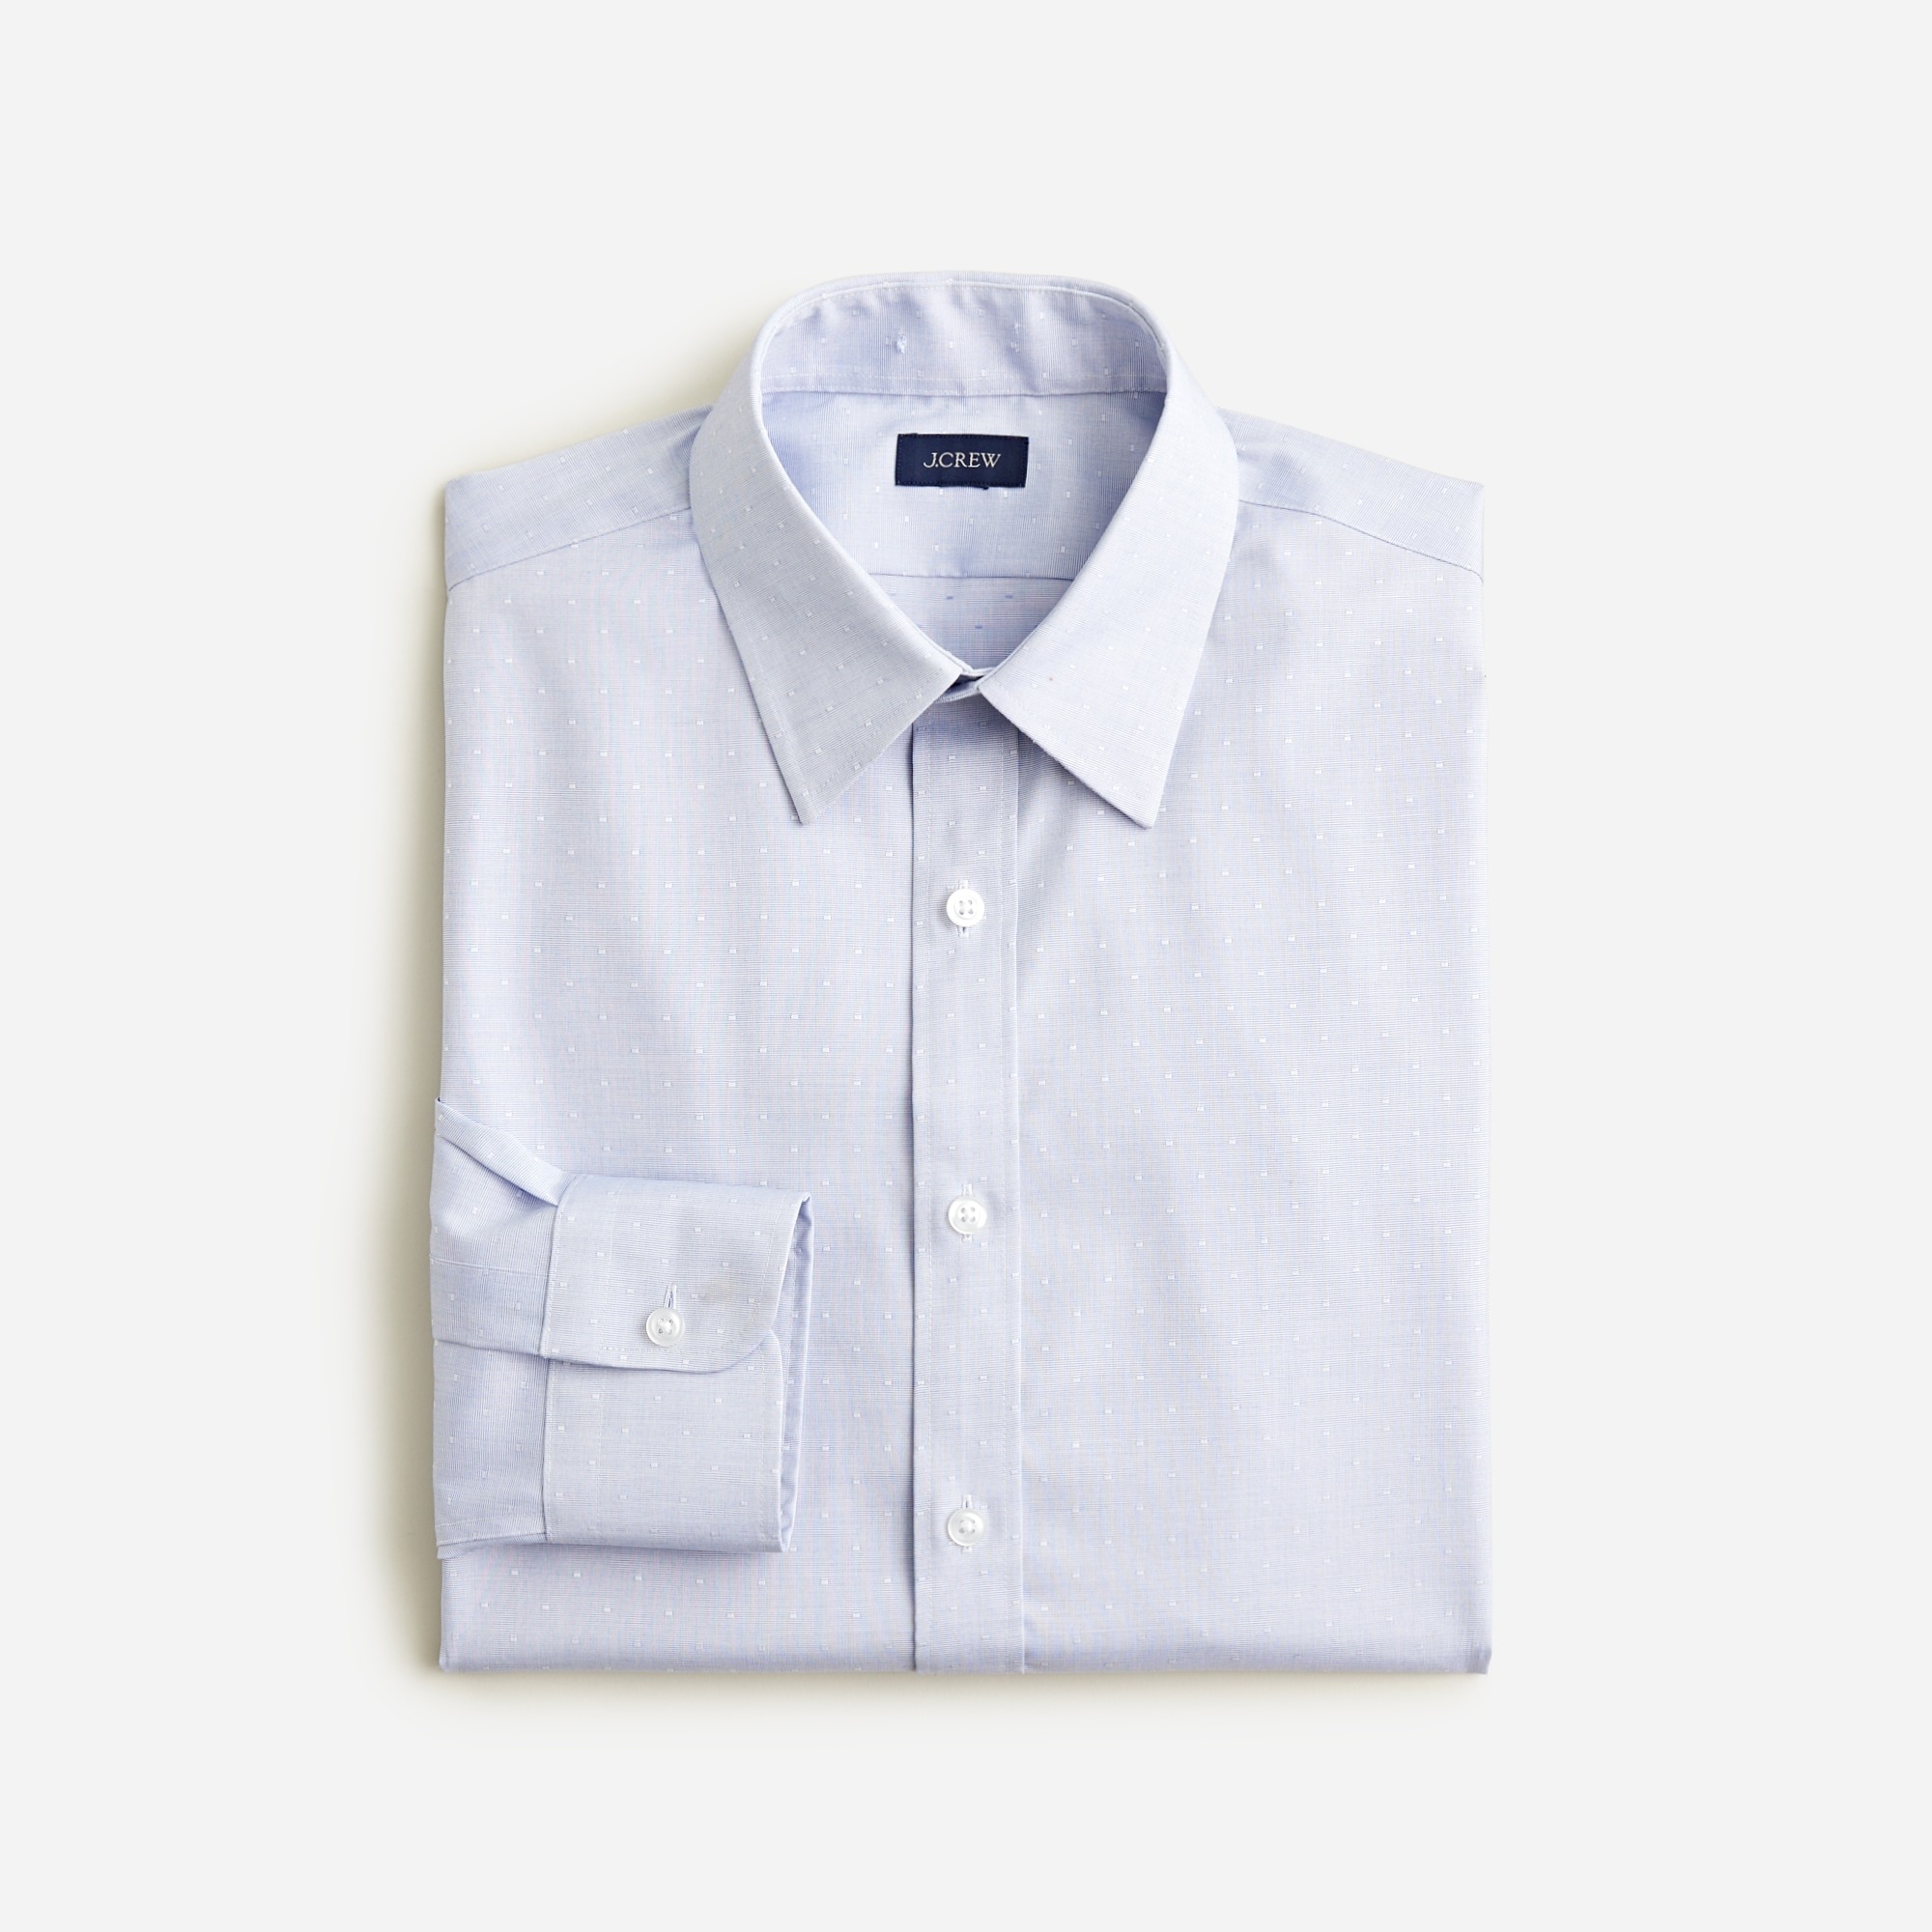 Jcrew Bowery wrinkle-free dobby dress shirt with point collar